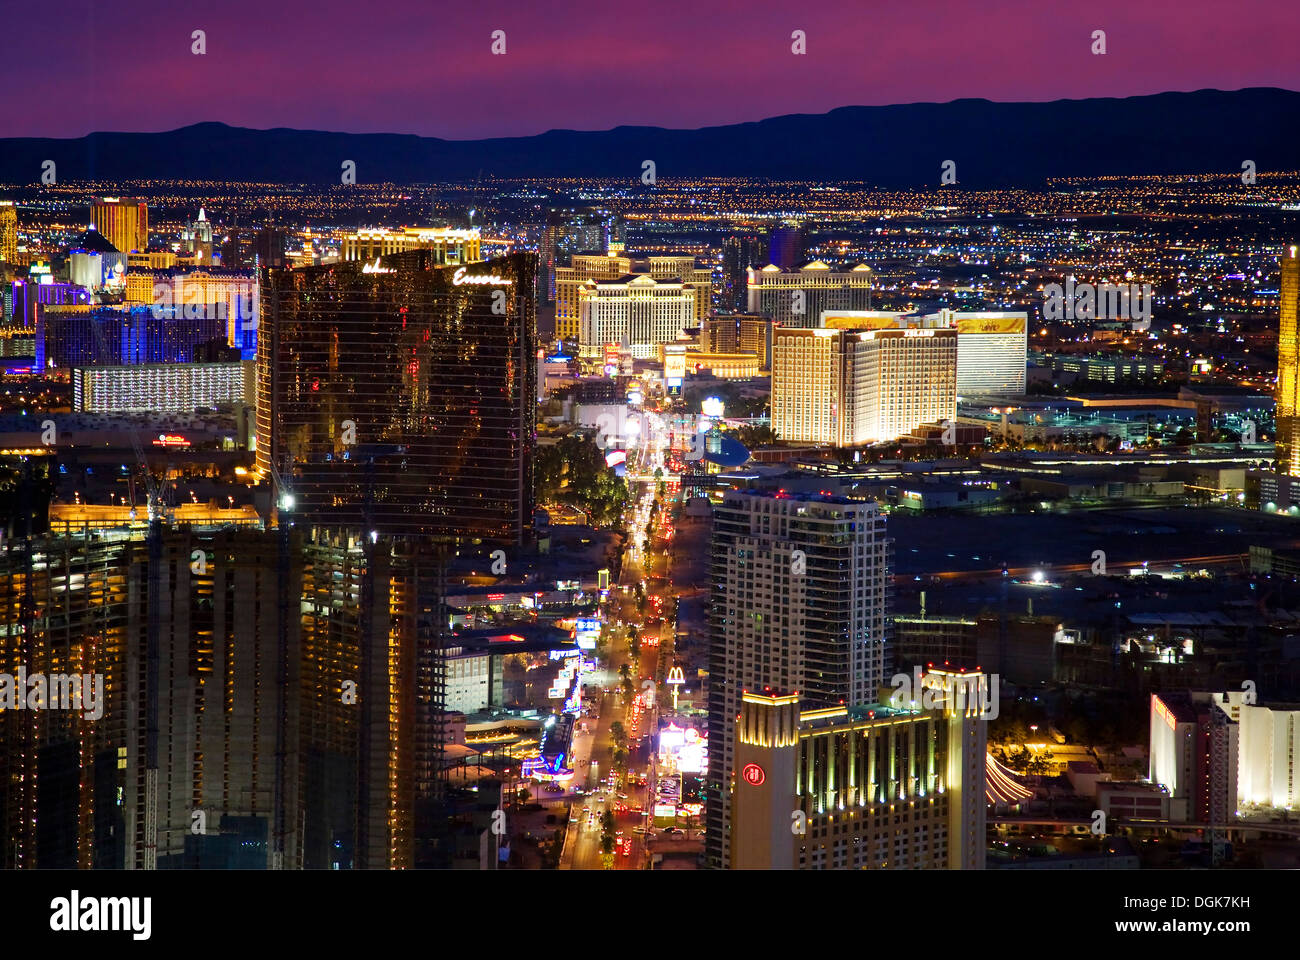 A view down the Las Vegas Strip at night. Stock Photo